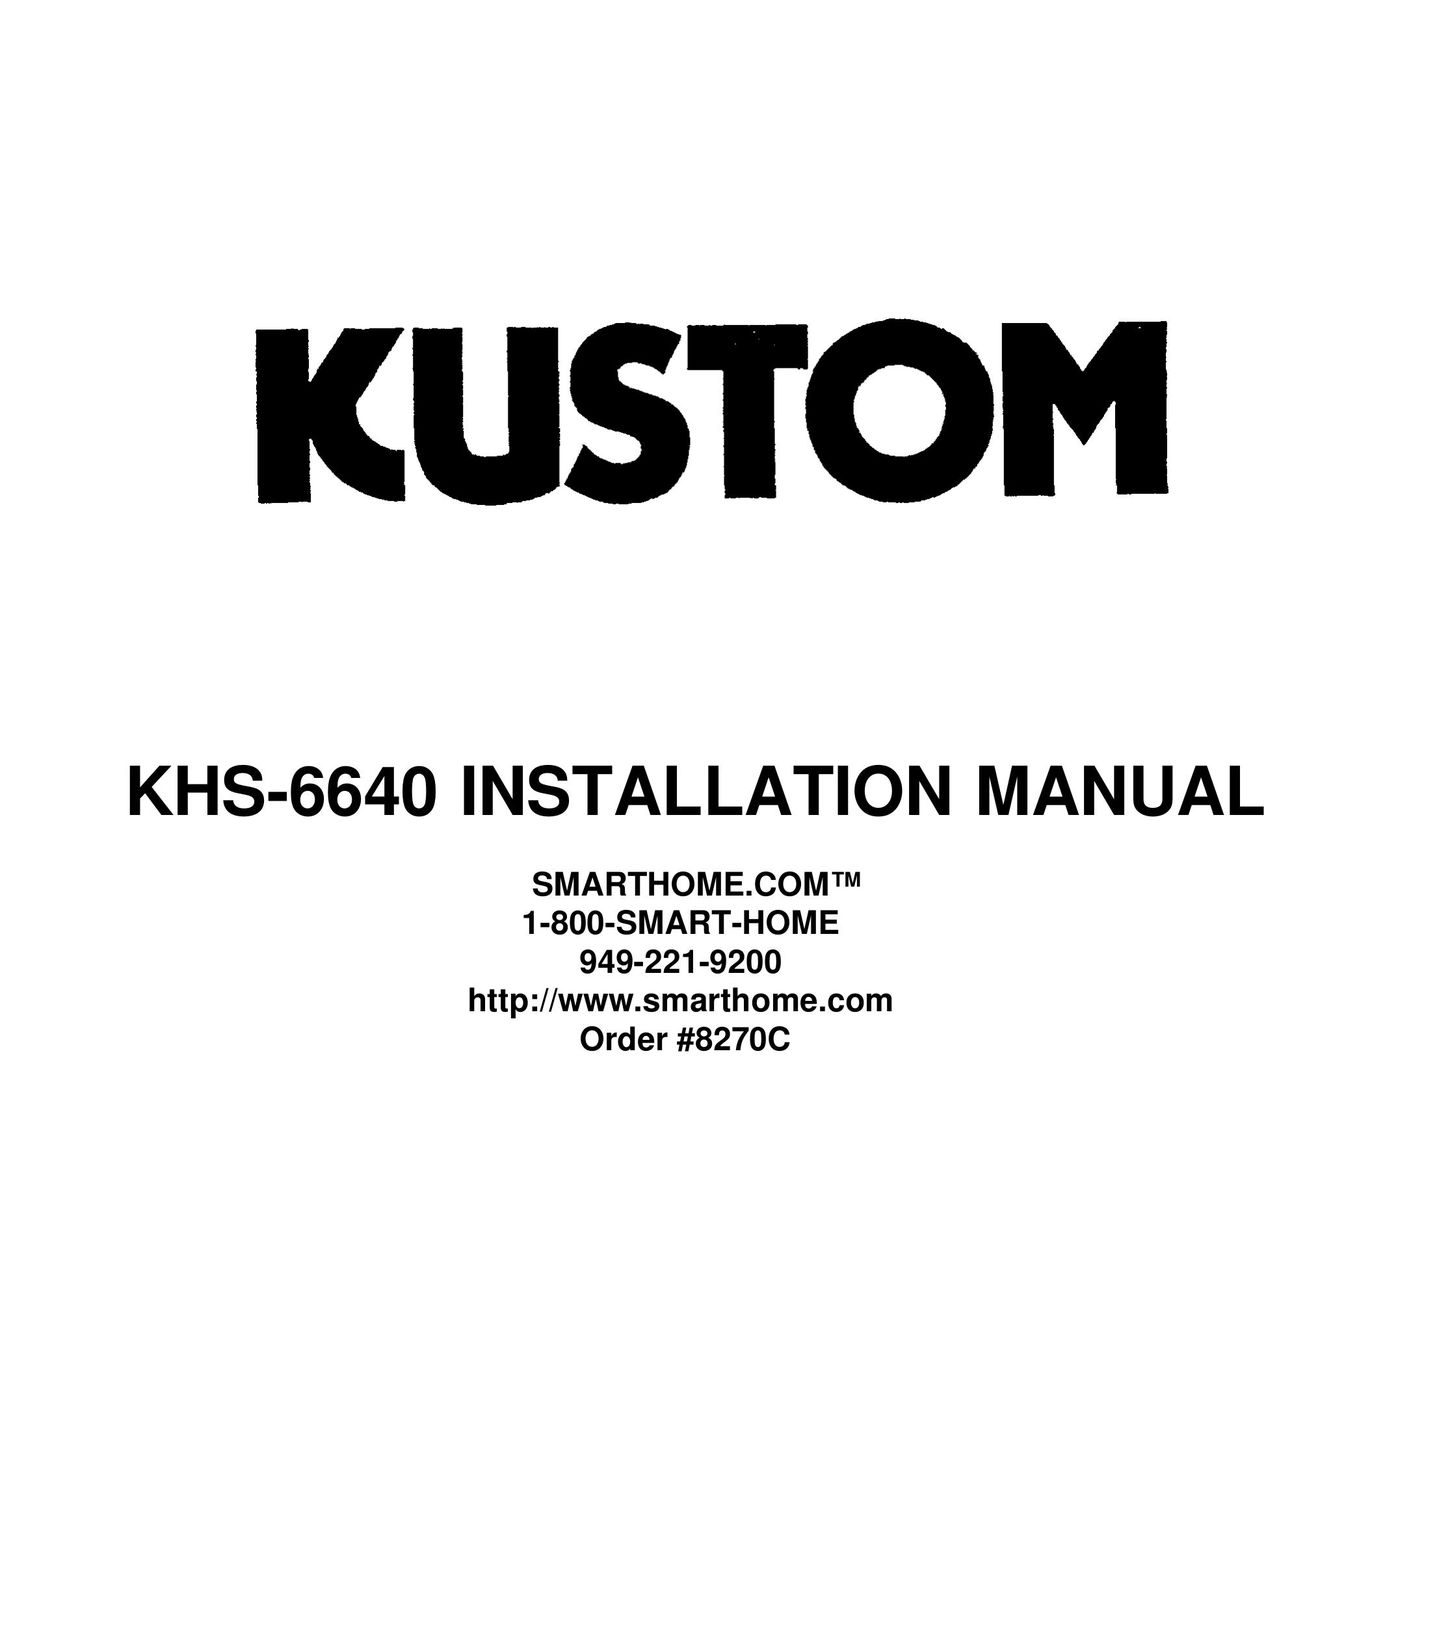 Kustom KHS-6640 Home Security System User Manual